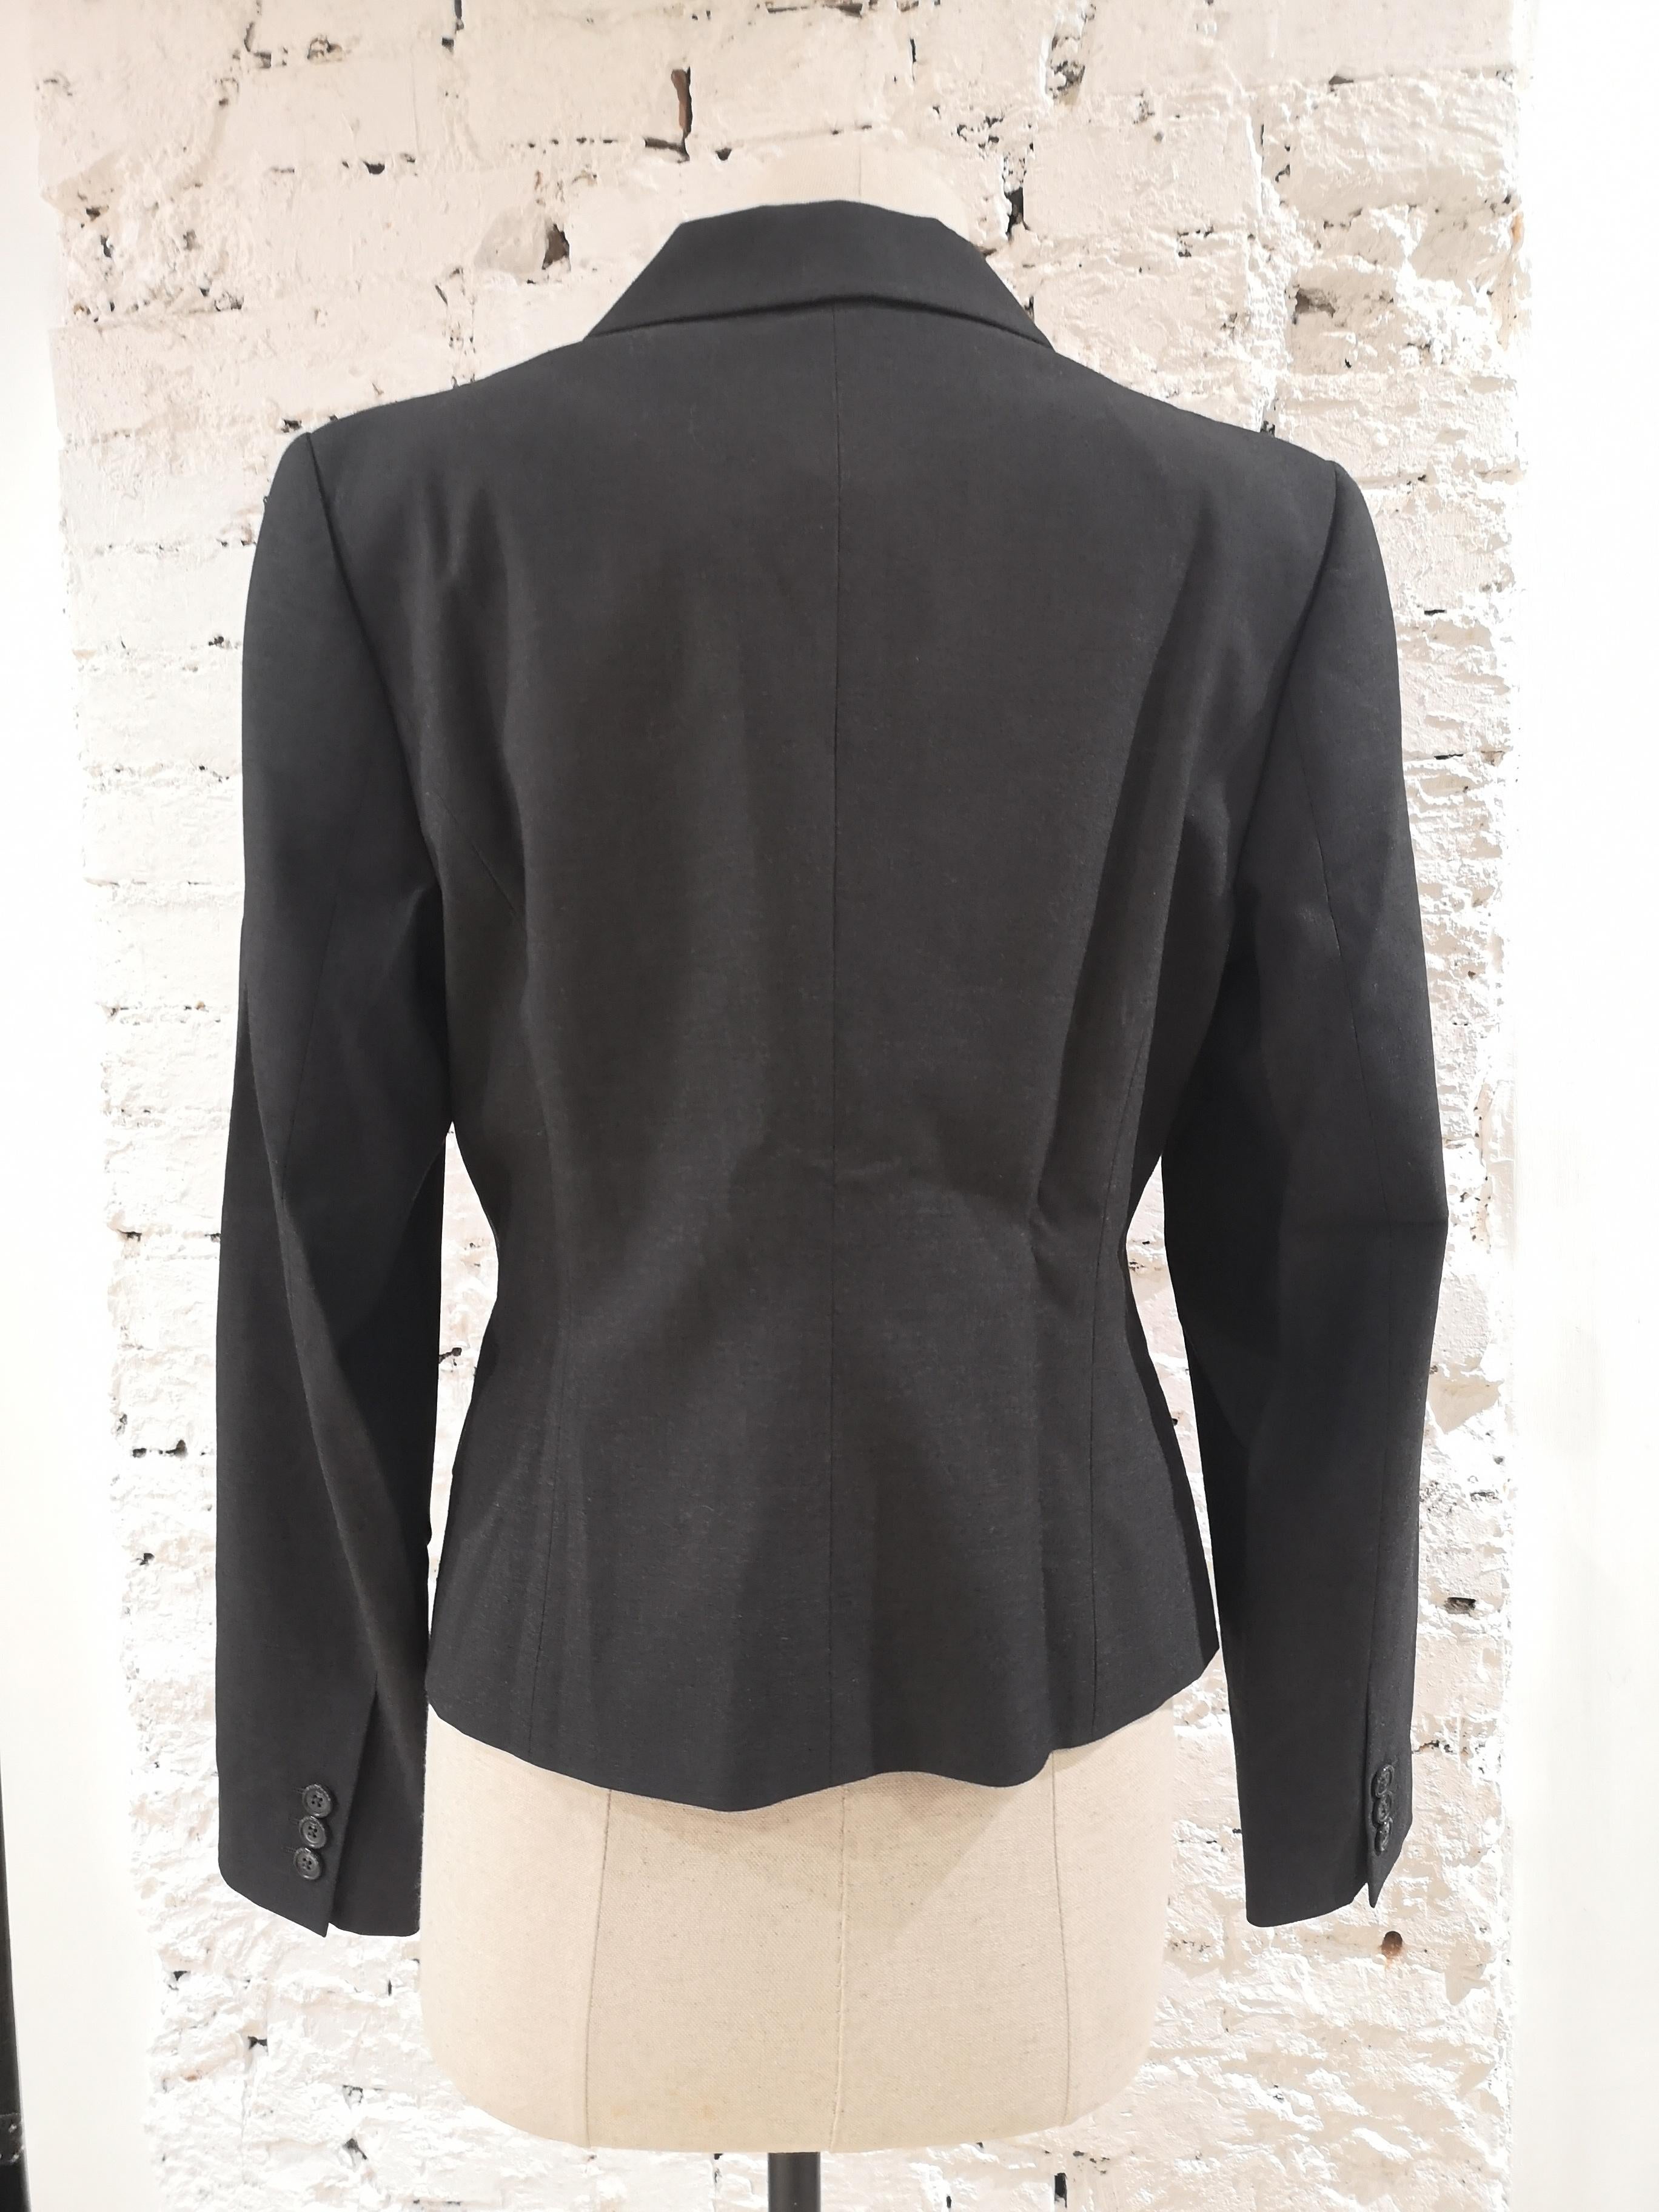 Women's Richmond grey jacket For Sale